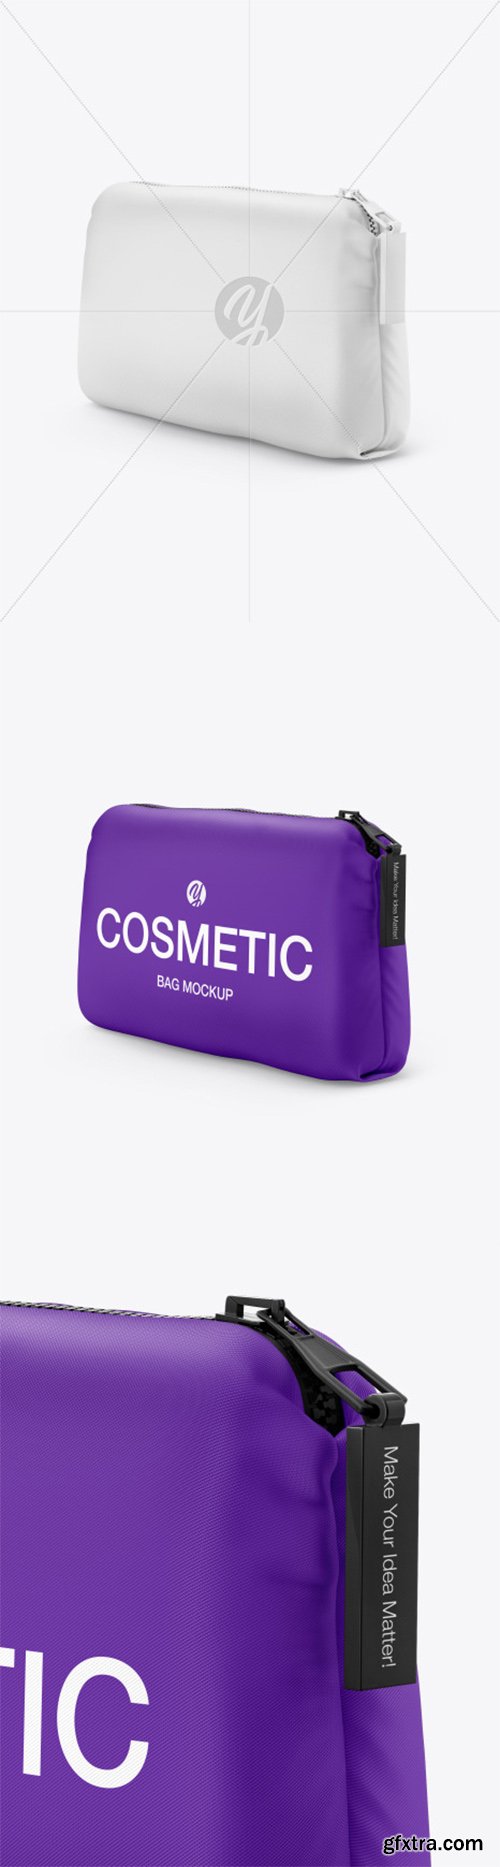 Cosmetic Bag Mockup 52016